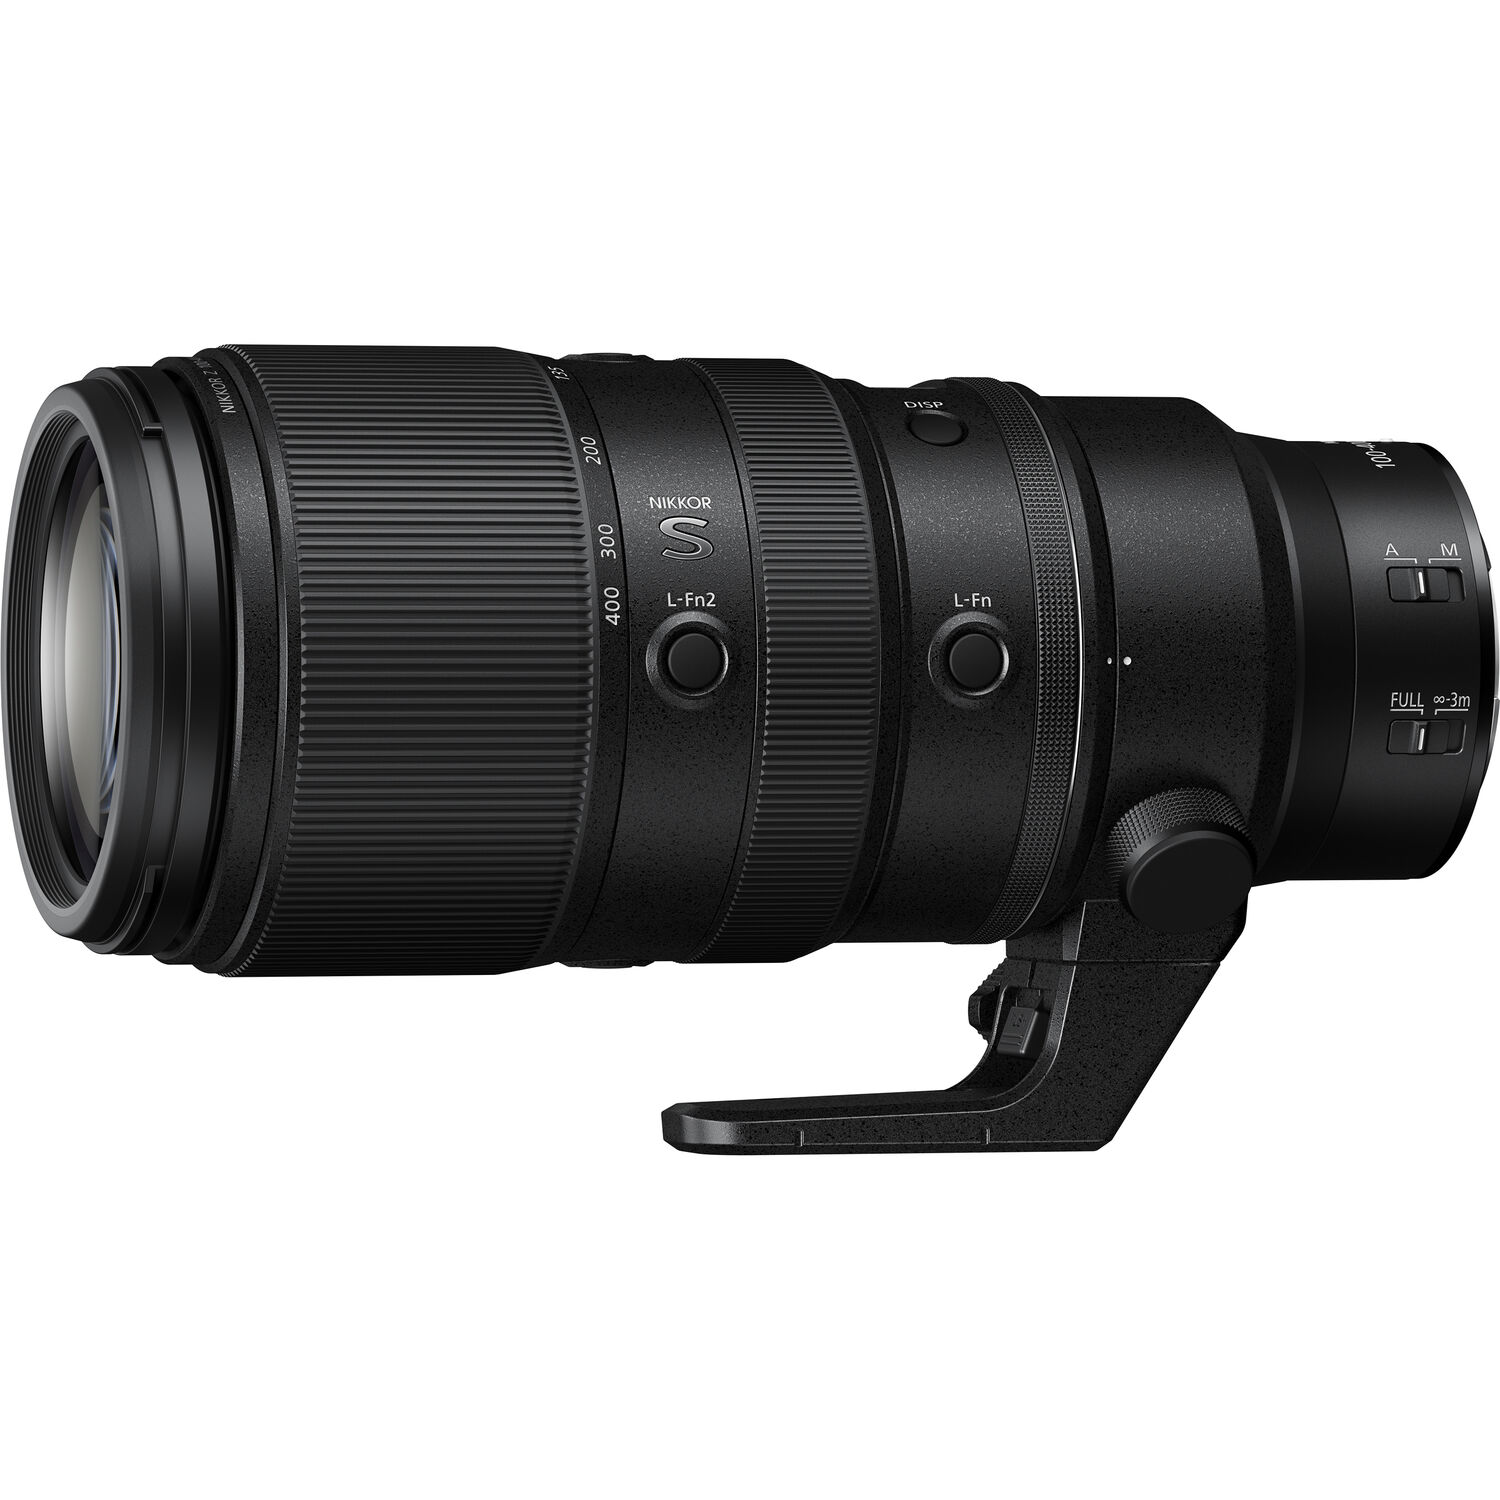 NIKKOR Z 100-400mm f/4.5-5.6 VR S Lens-Camera Lenses-futuromic